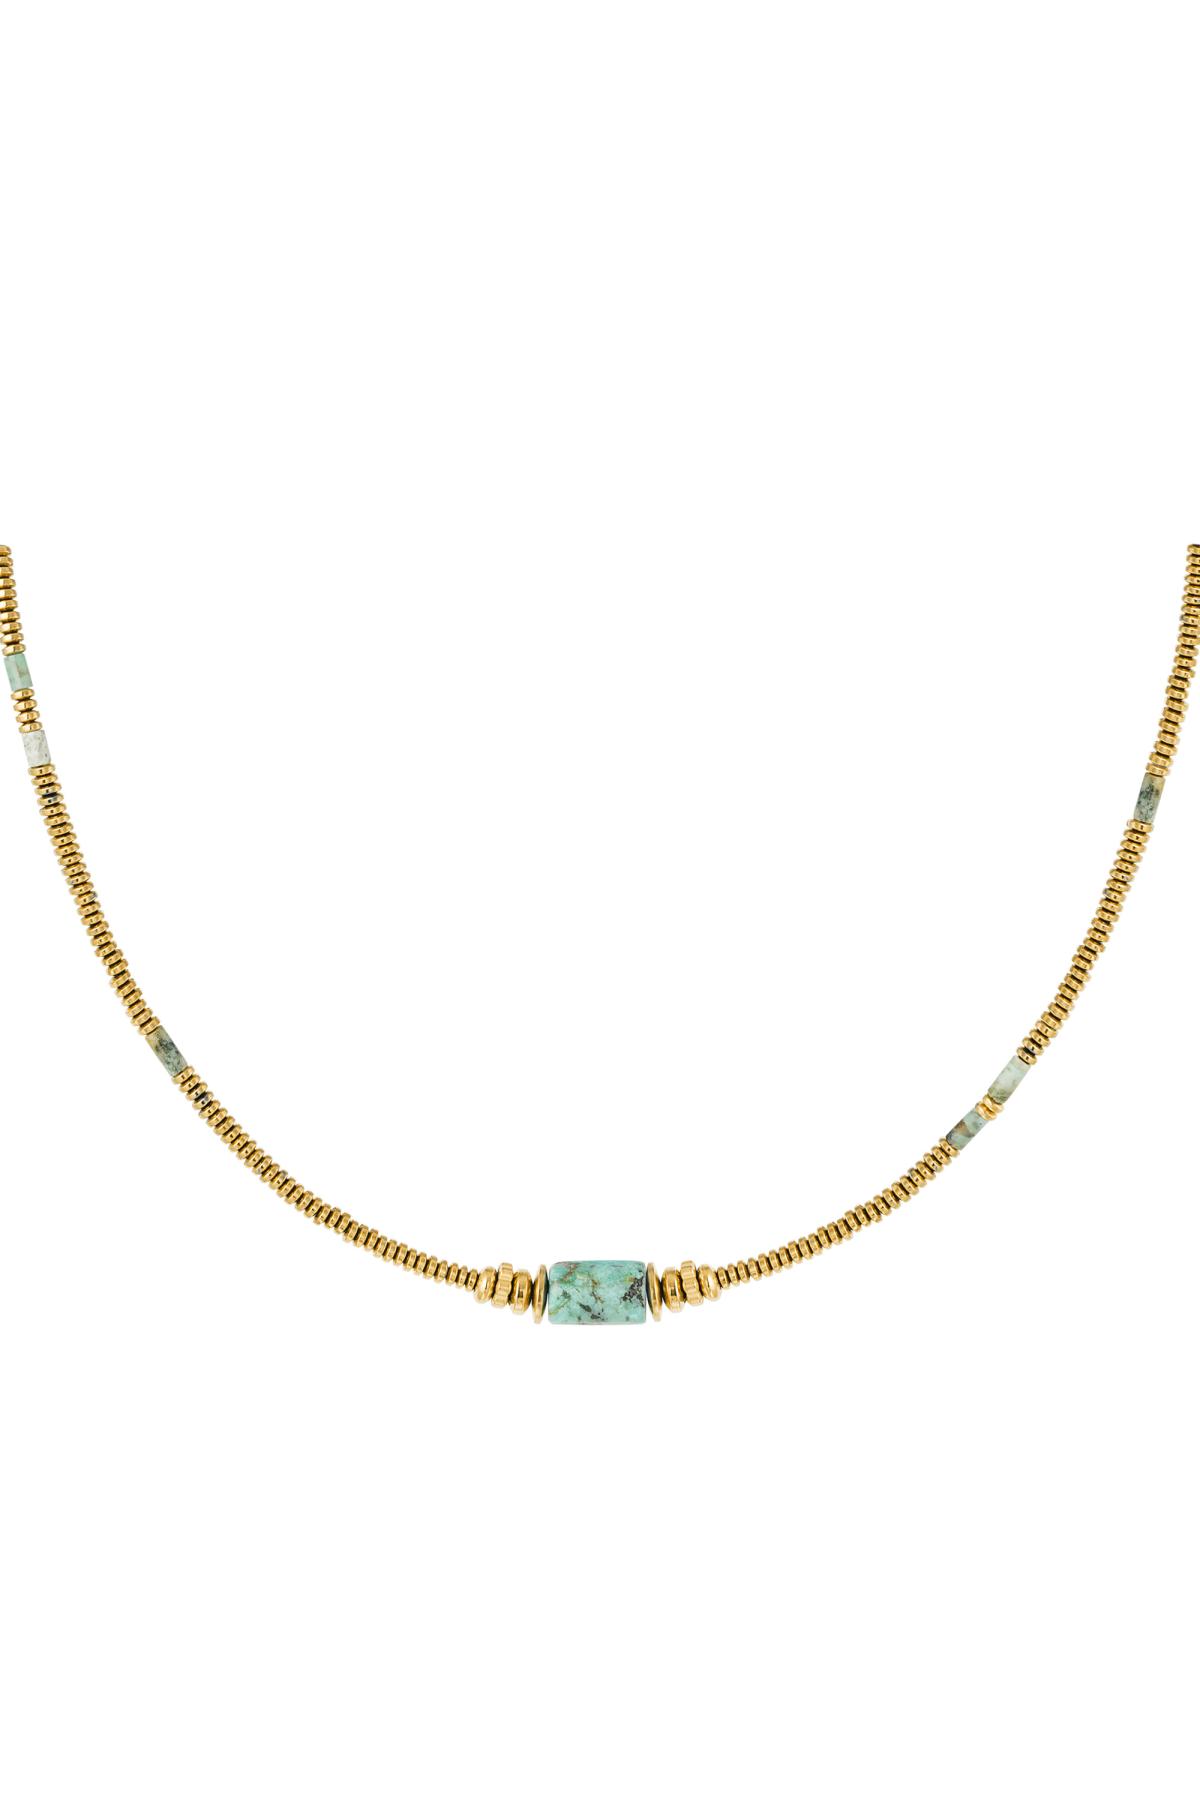 Halskette aus dünnen Perlen mit Anhänger - Kollektion Natural Stones Grün & Gold Edelstahl 